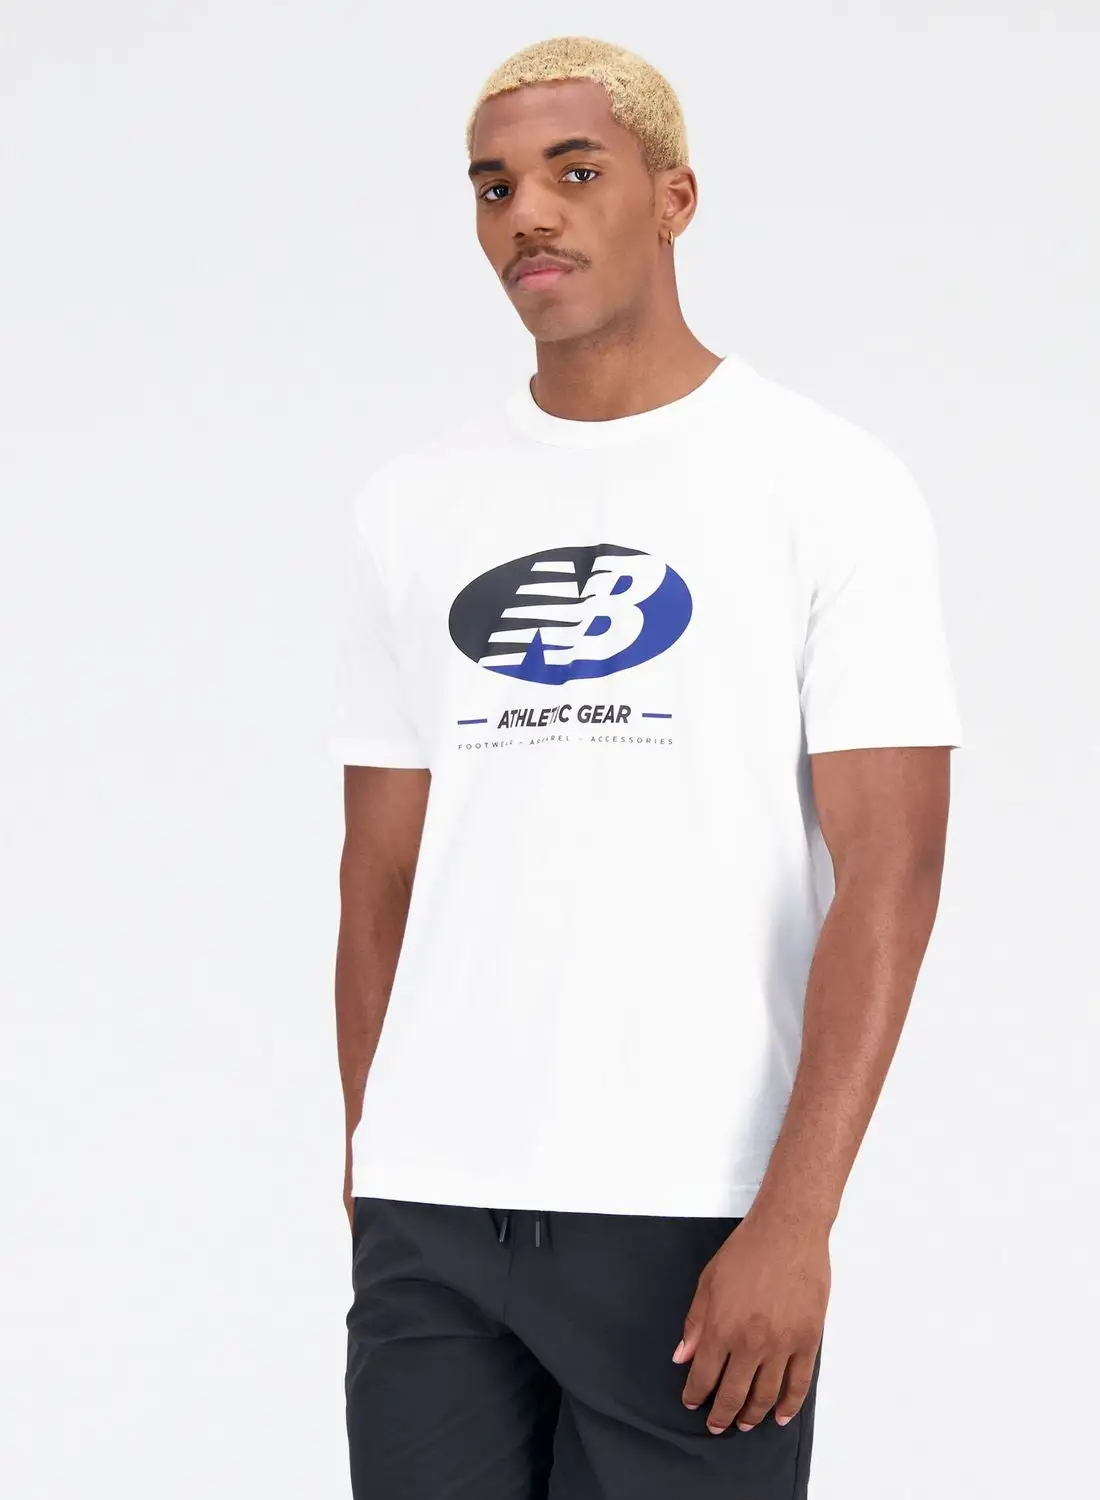 New Balance Essential Graphic T-Shirt